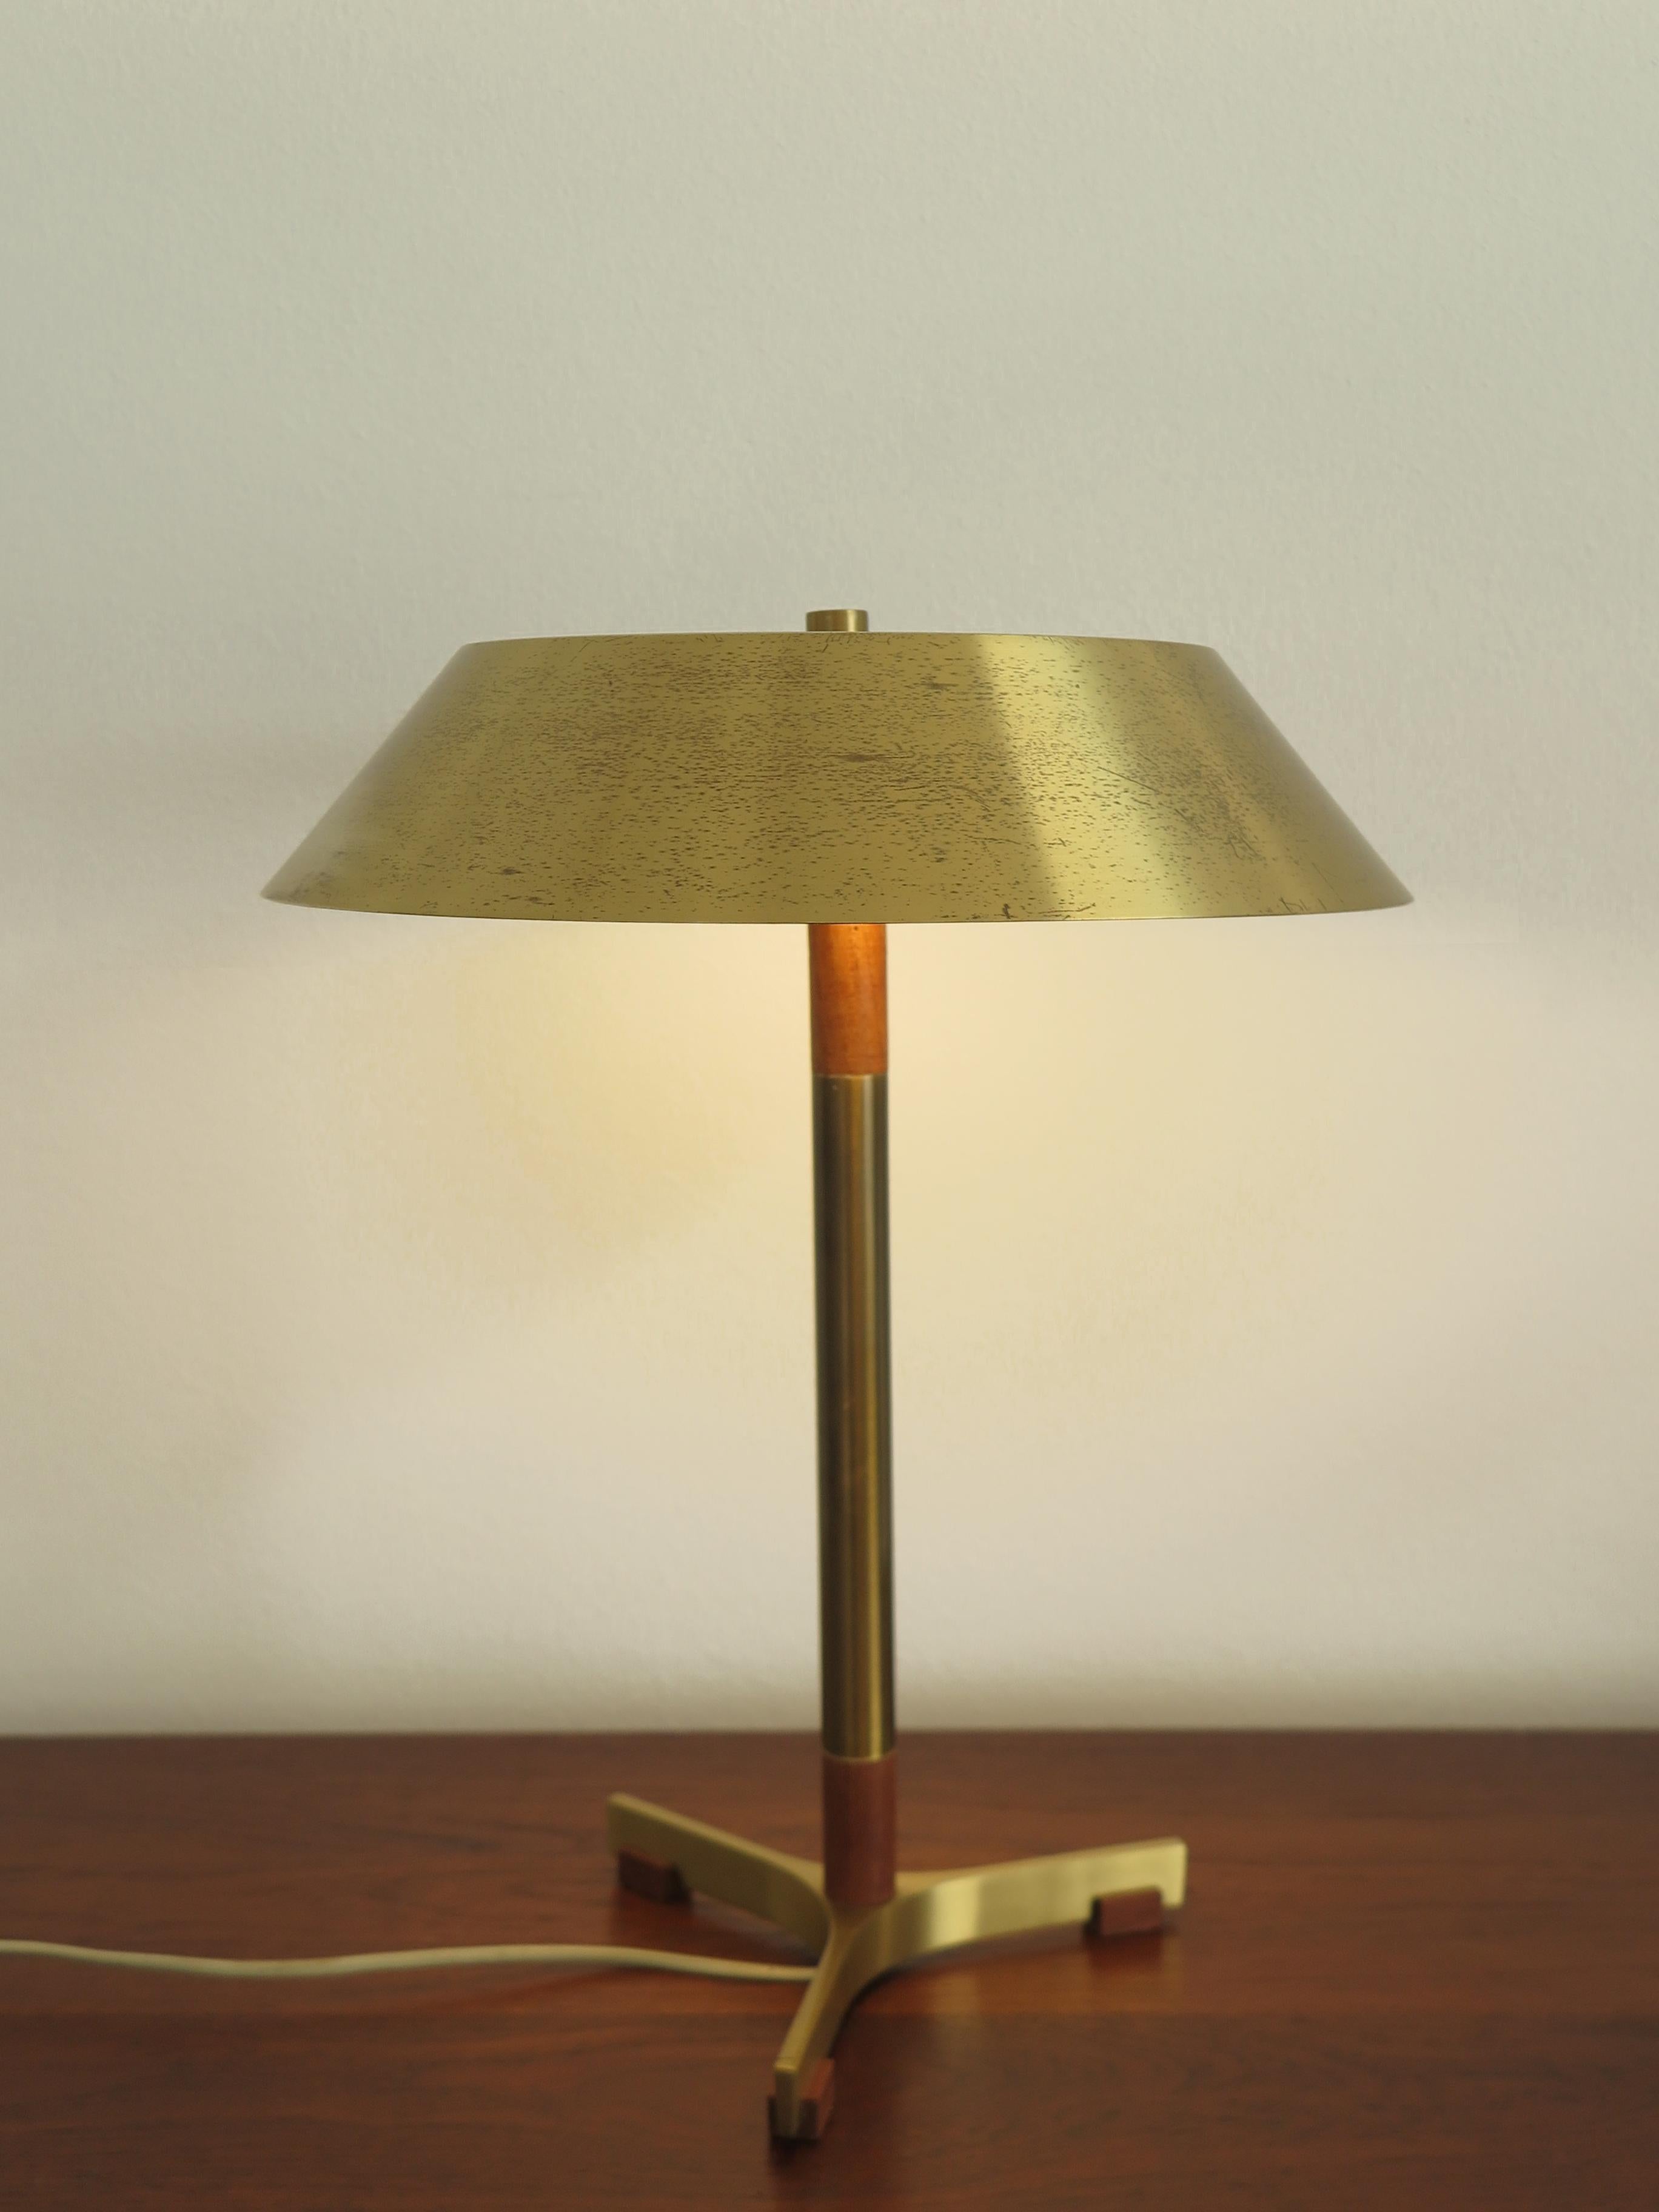 Lampe scandinave de table modèle President disegnata Jo Hammerborg e prodotta da Fog & Morup nel 1966 con paralume in ottone e stelo ottone e legno, Danimarca anni 60.
Design/One Modern.

Veuillez noter que la lampe est d'origine de l'époque et